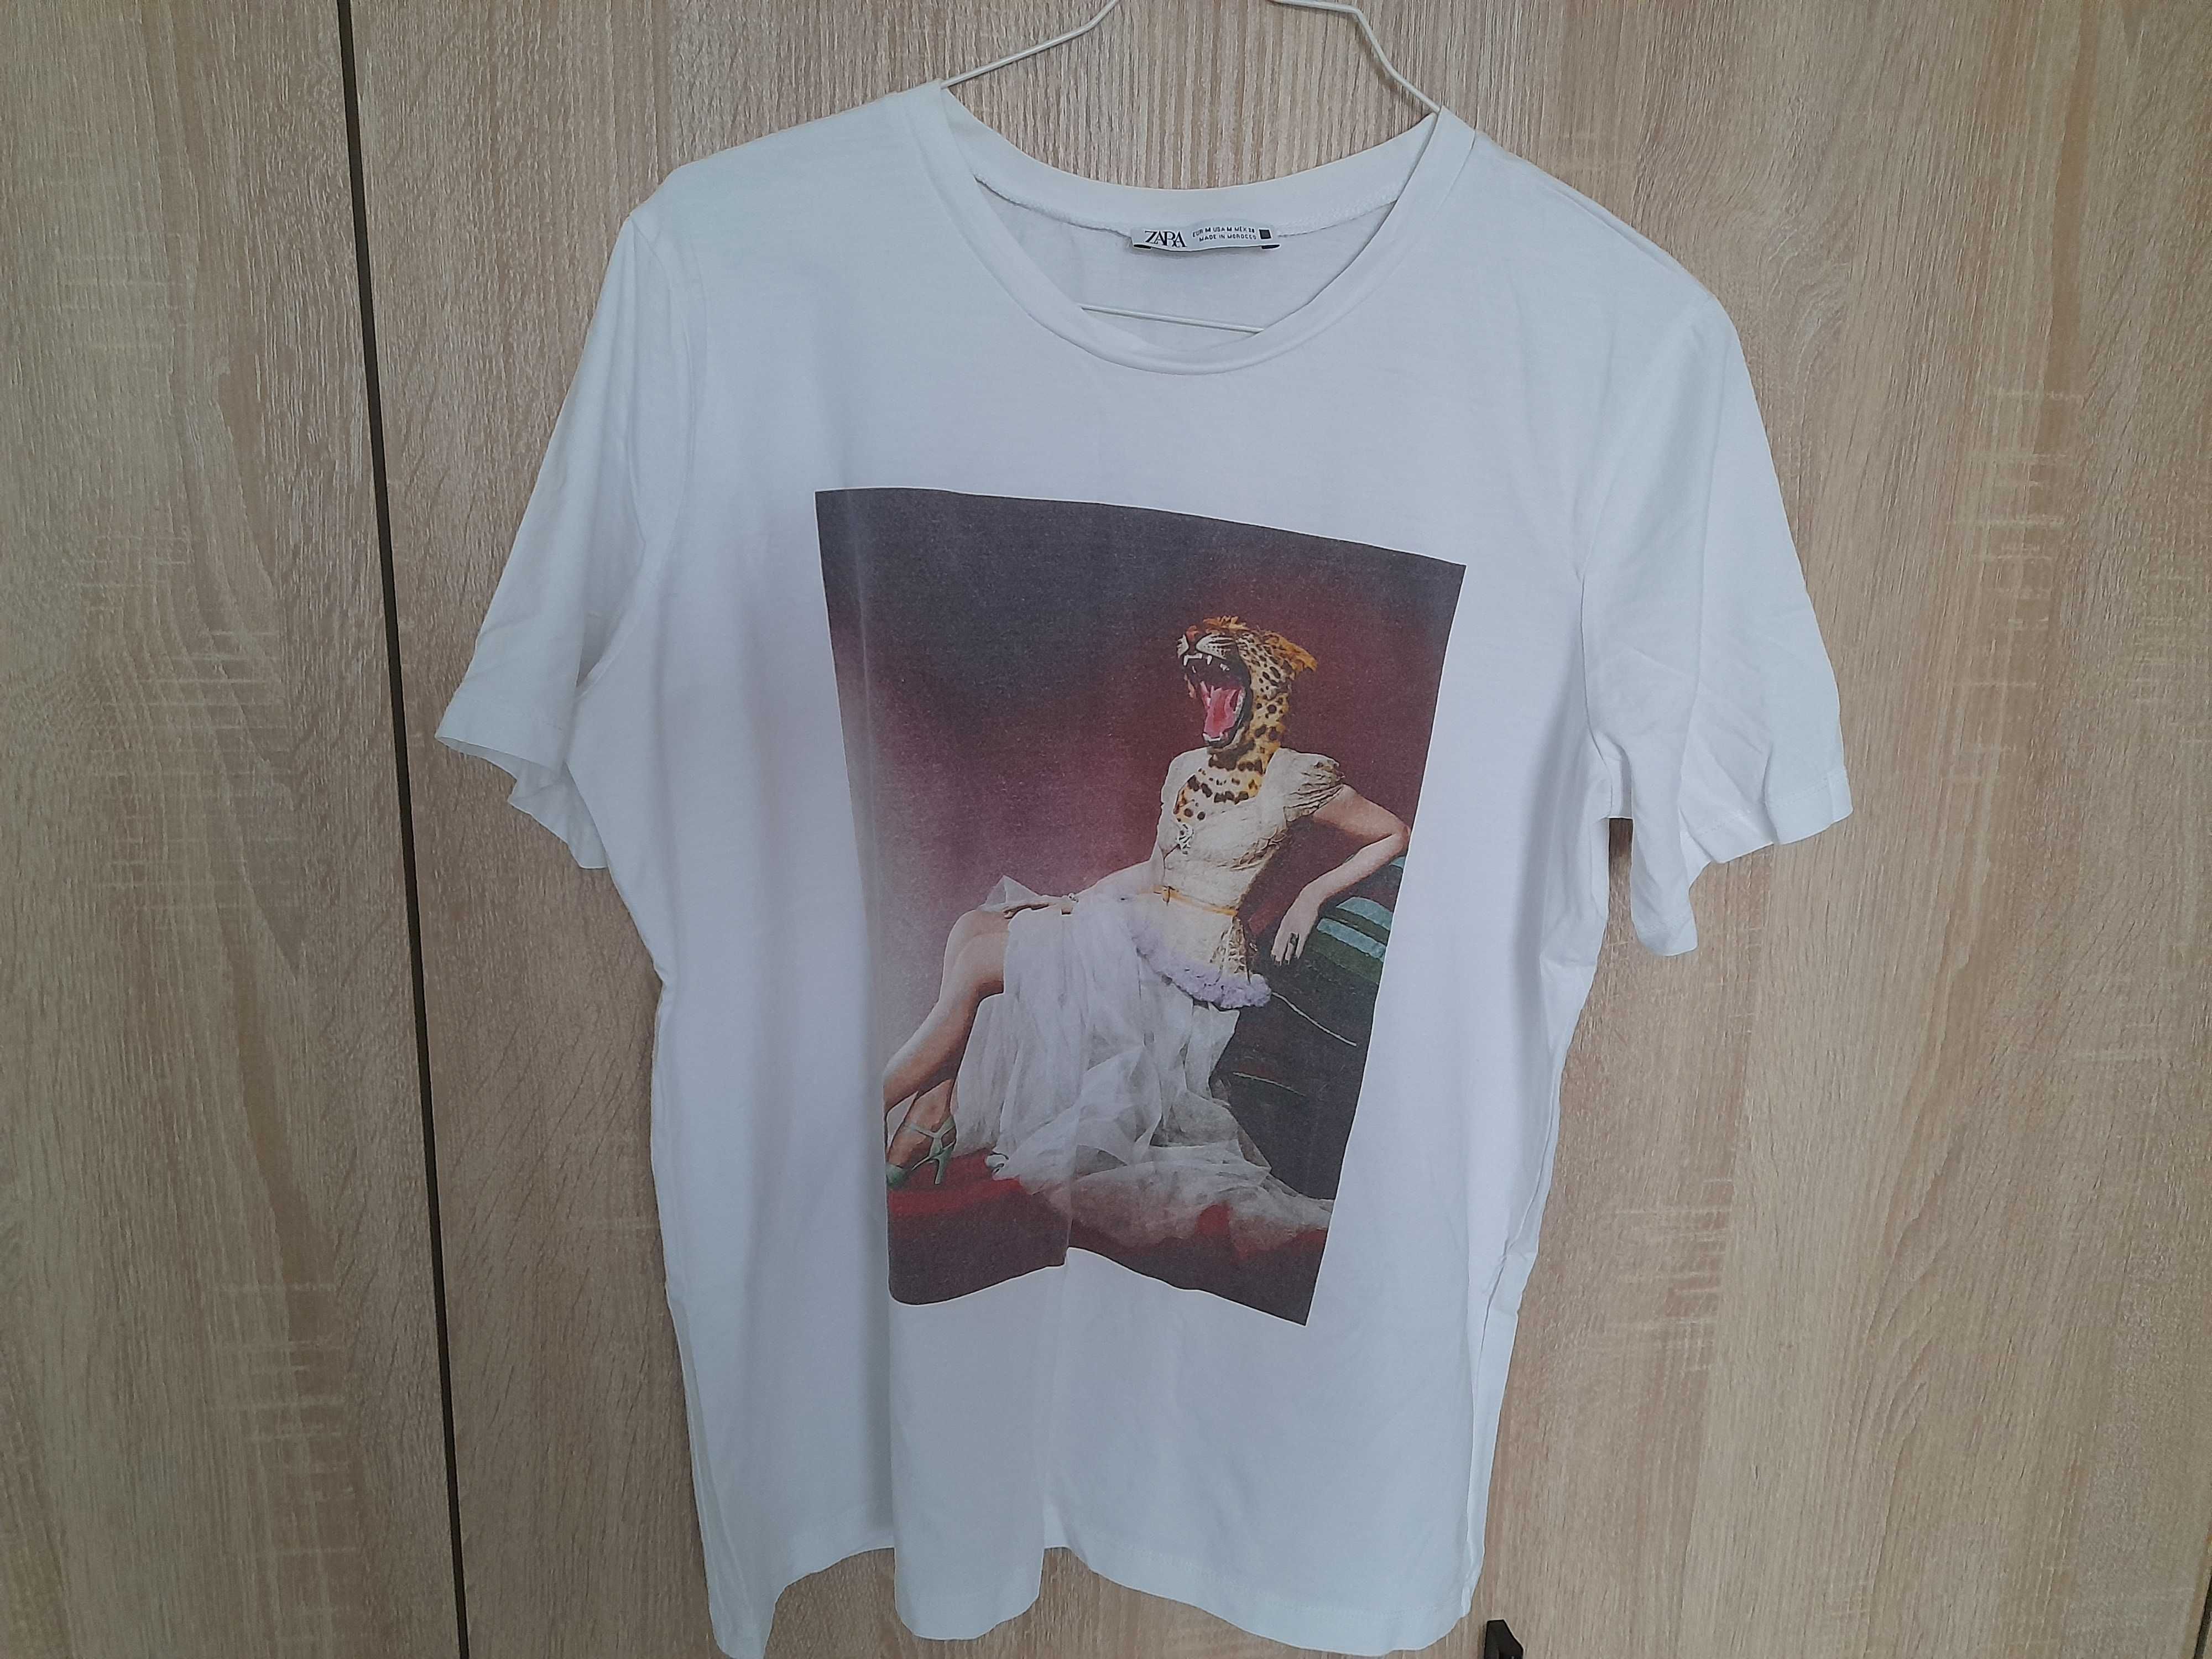 Markowy ZARA t-shirt bluzka damska M pachy 50 cm x2 art design